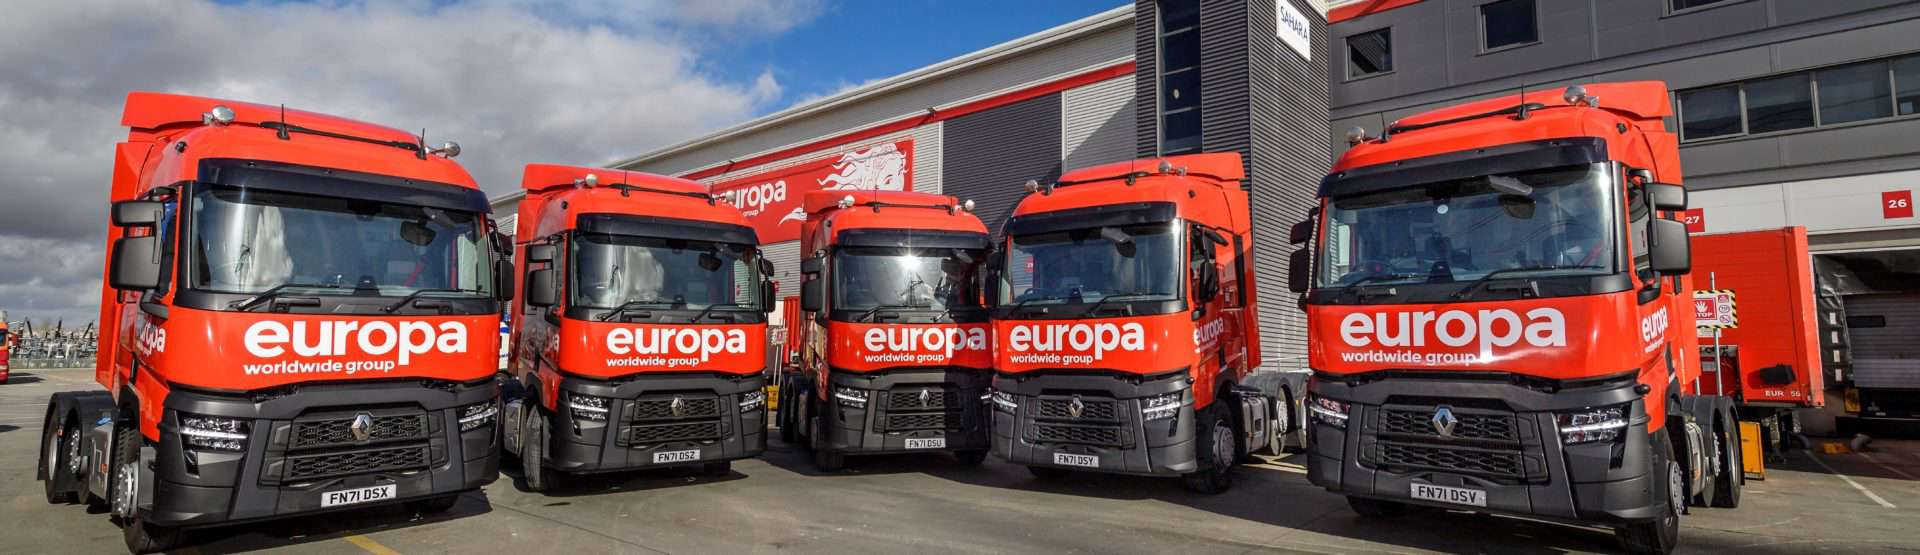 Europa Renault Trucks